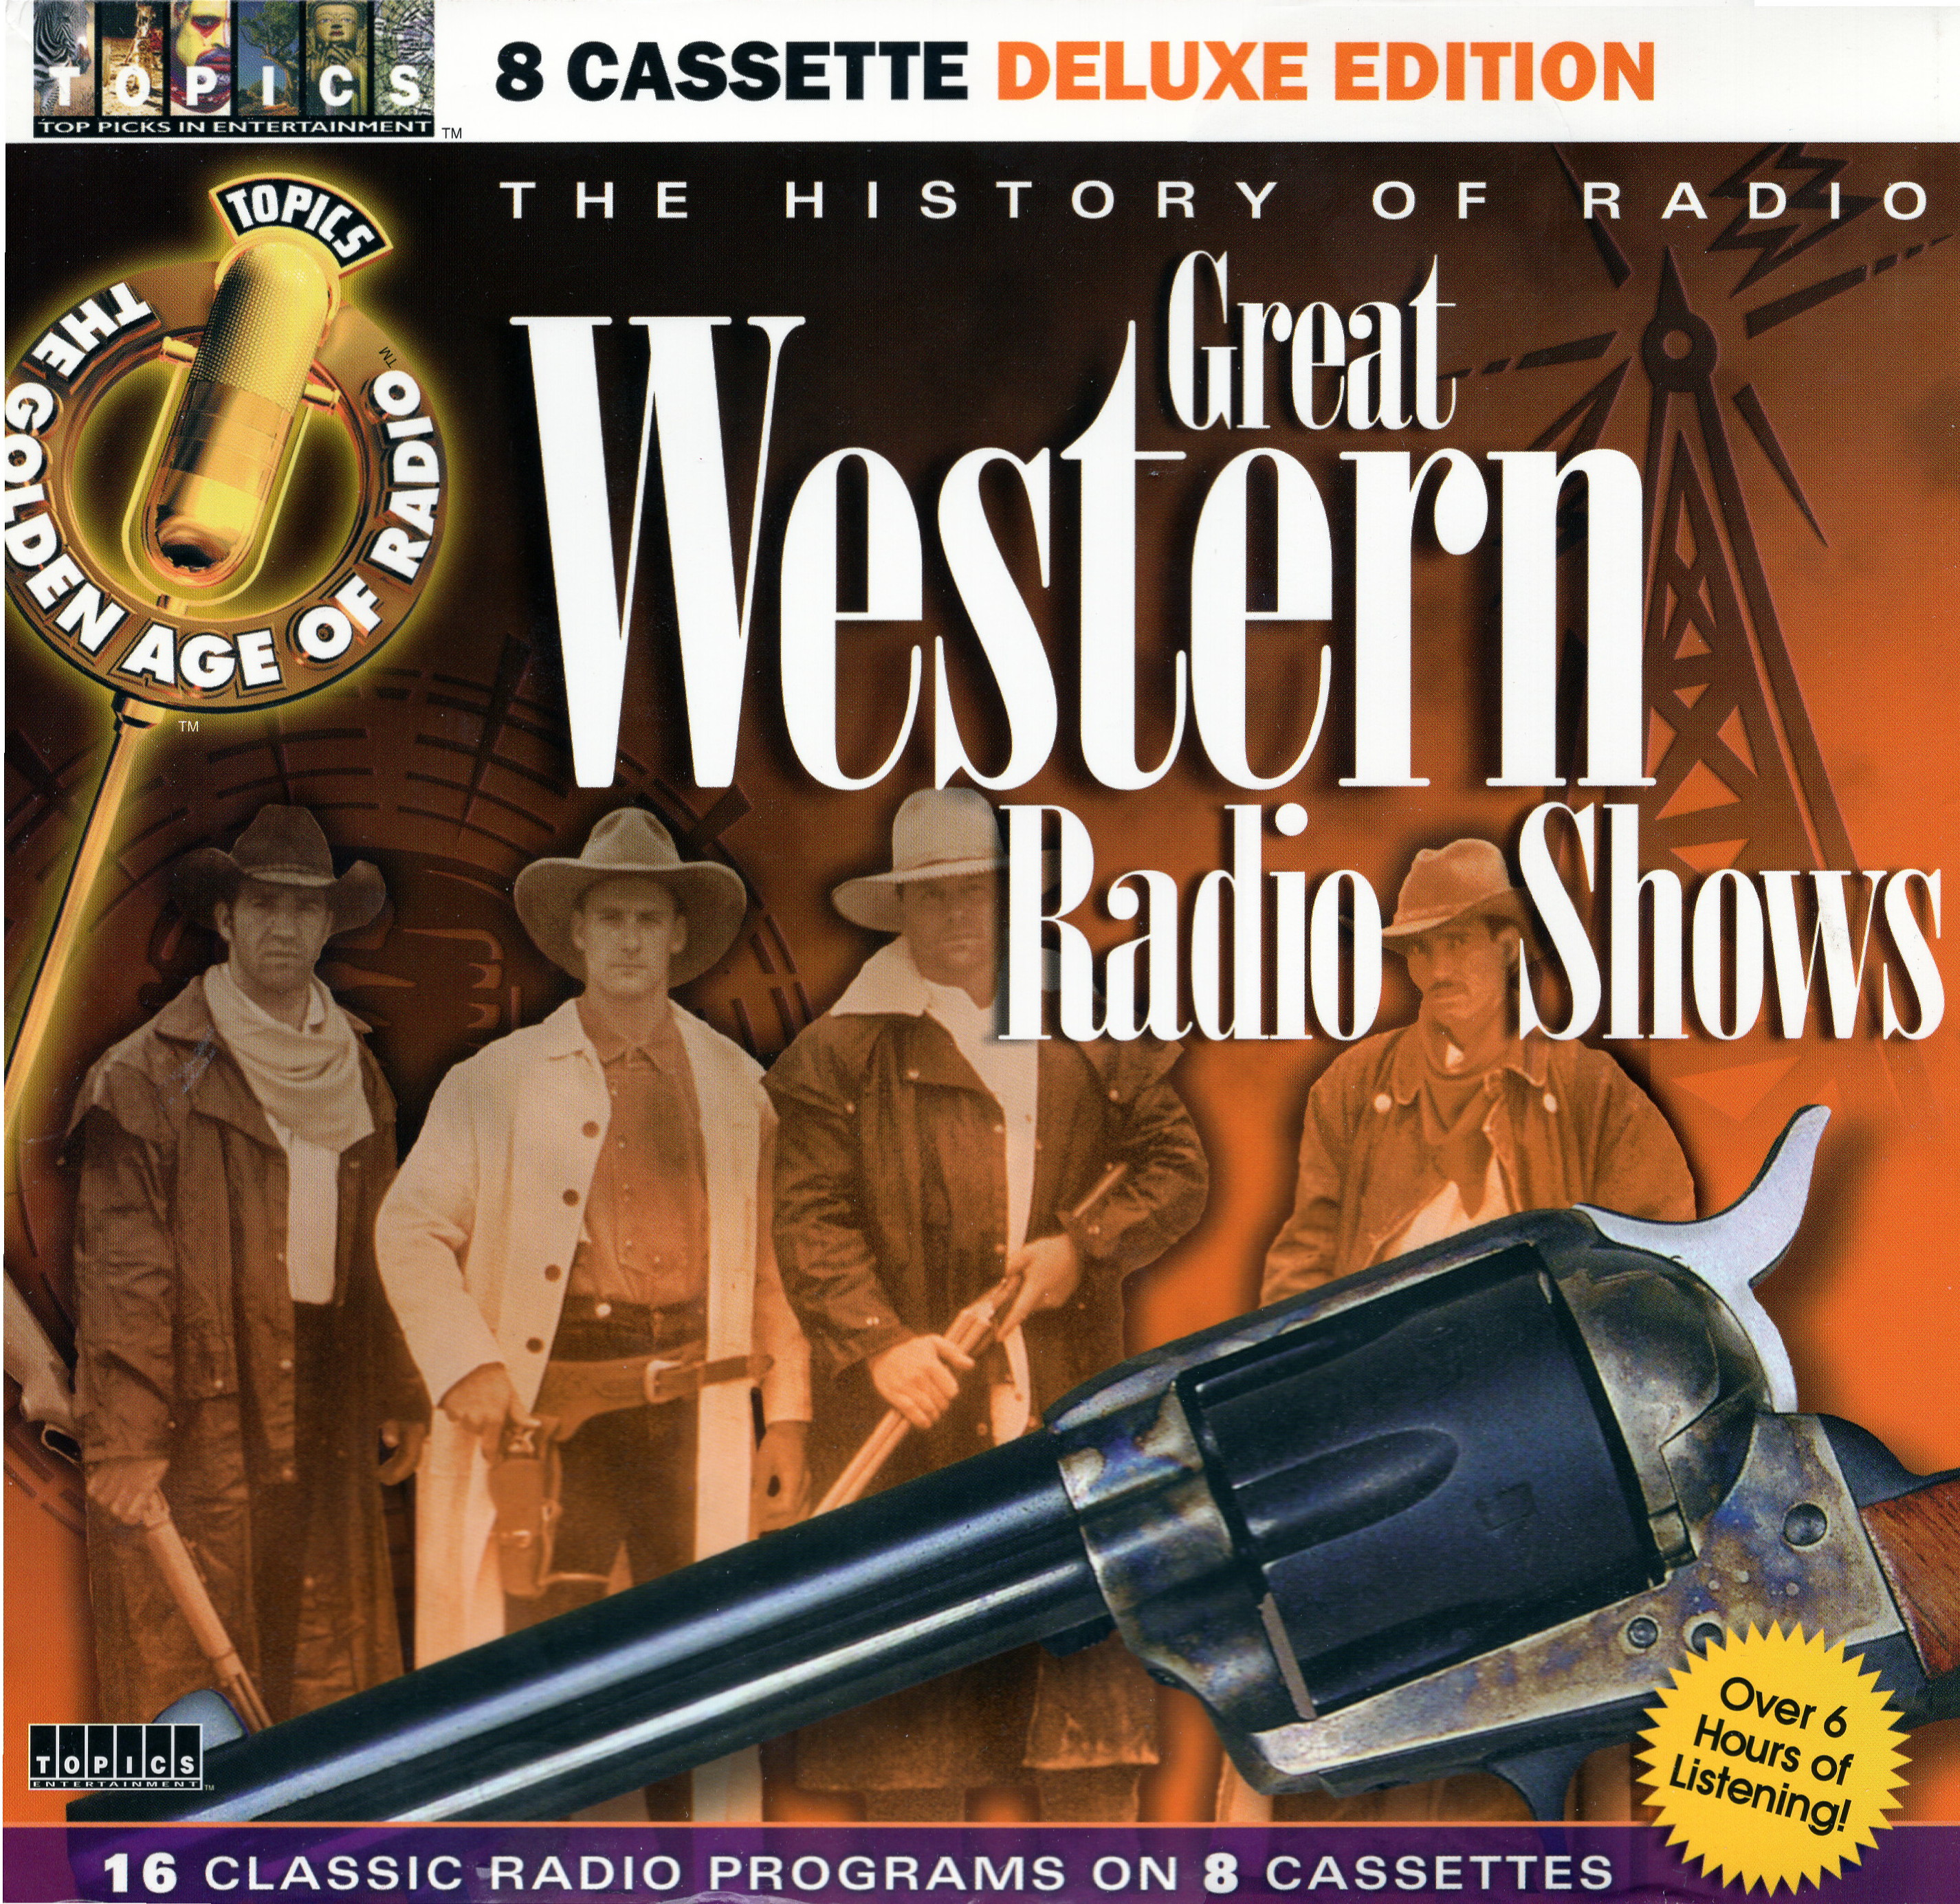 Great Western Radio Shows